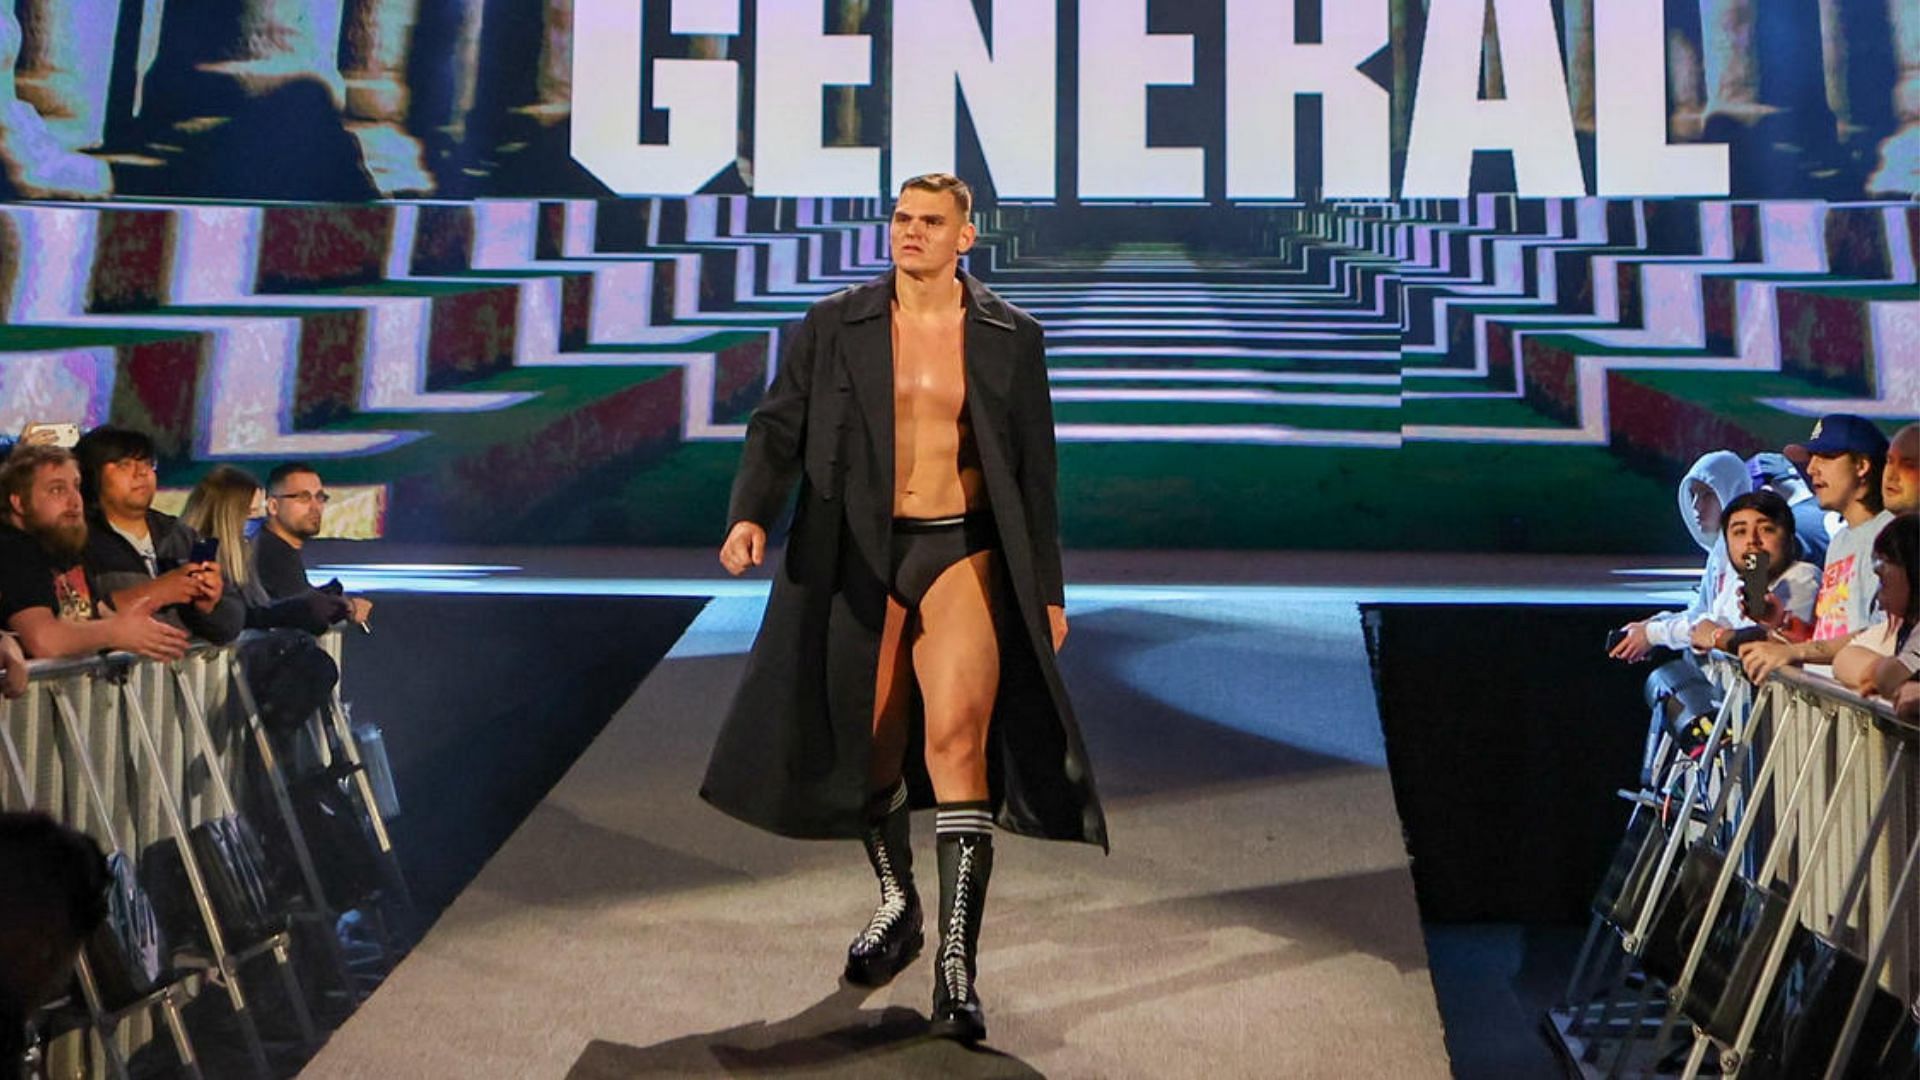 Gunther is still the WWE Intercontinental Champion